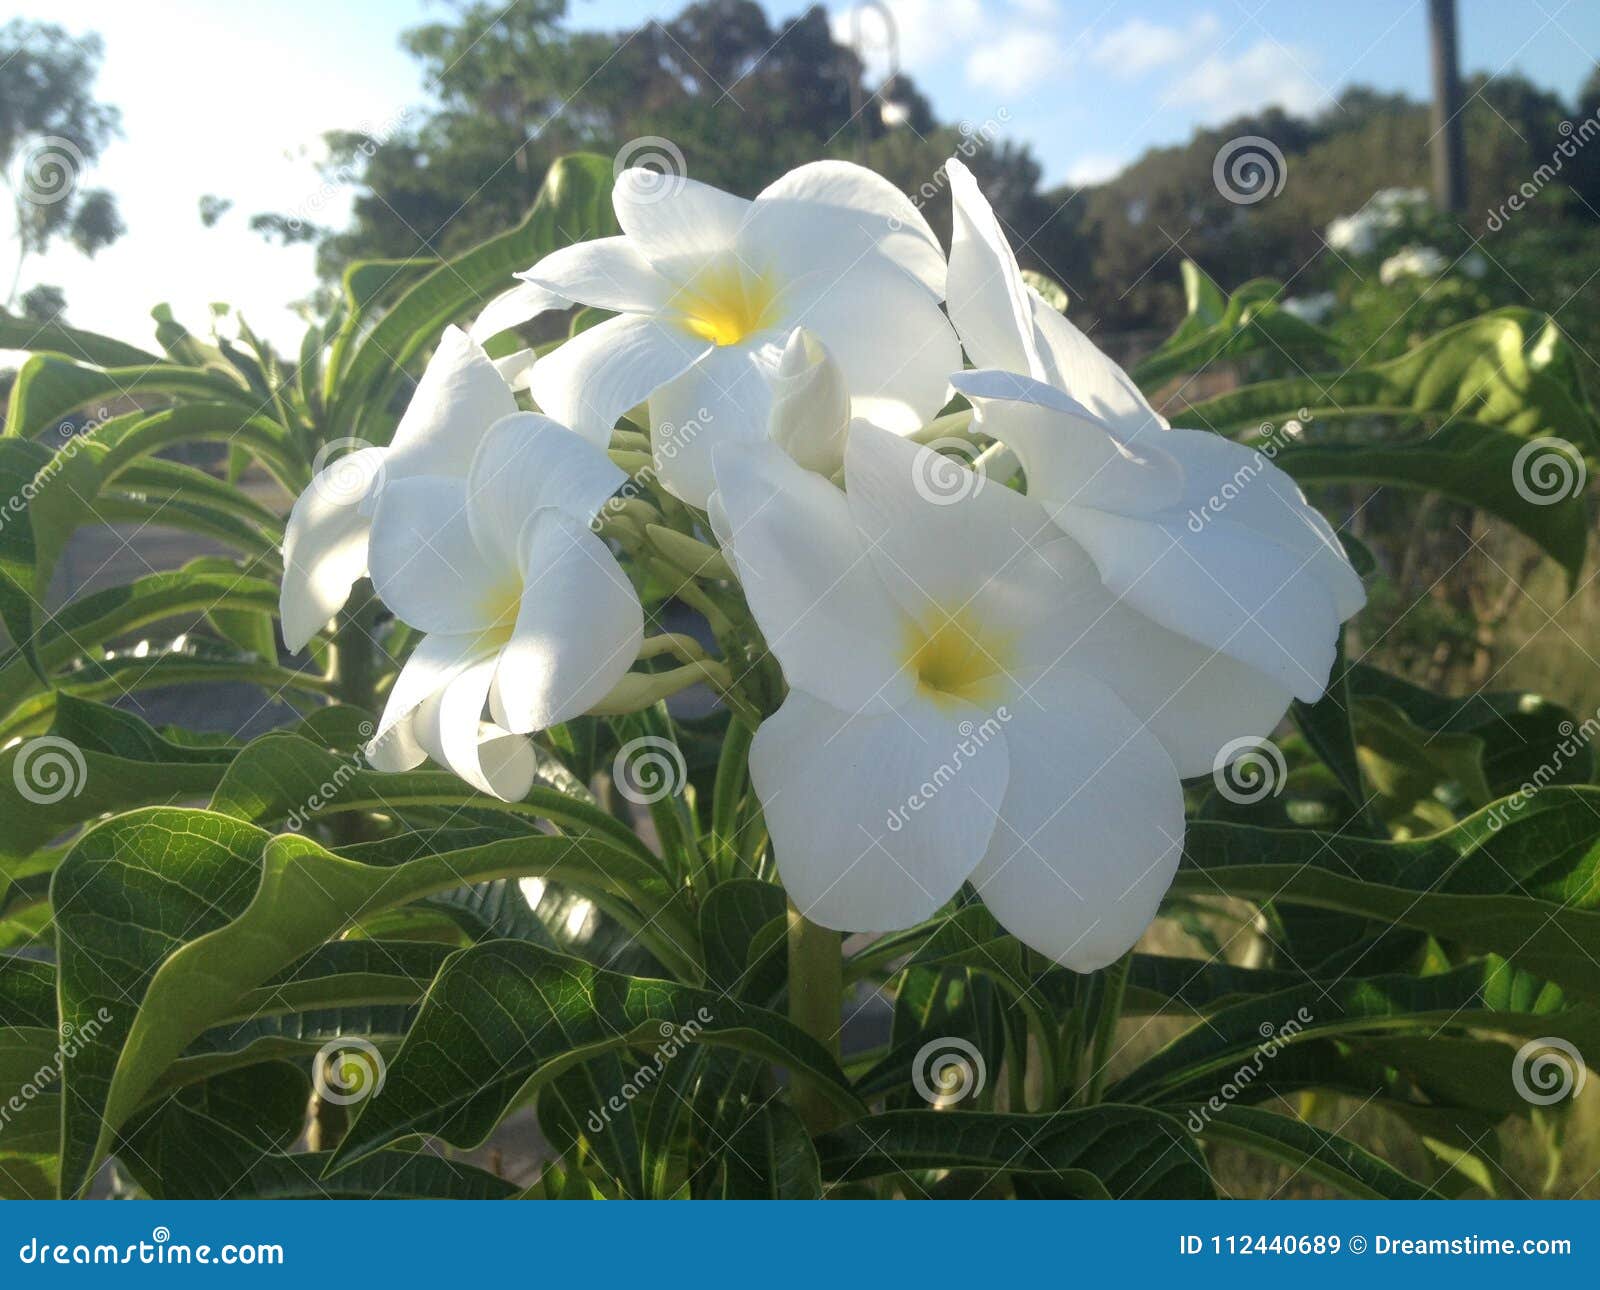 picture of a plumeria white flower